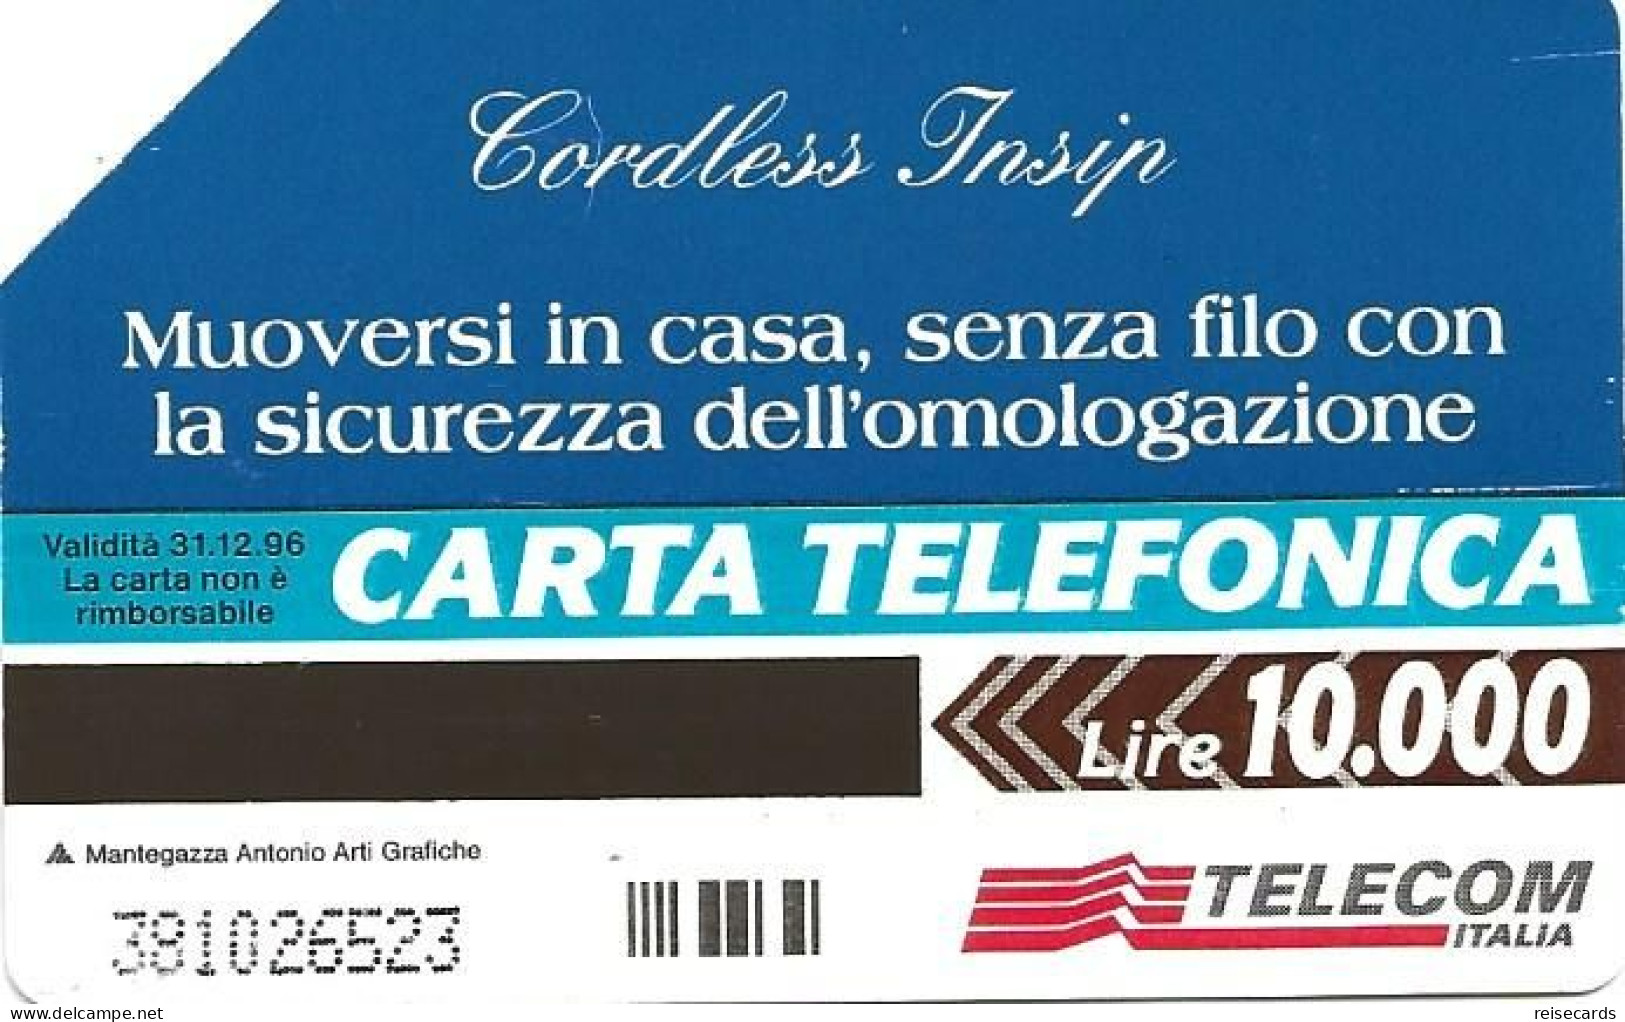 Italy: Telecom Italia - Cordless Insip - Öff. Werbe-TK